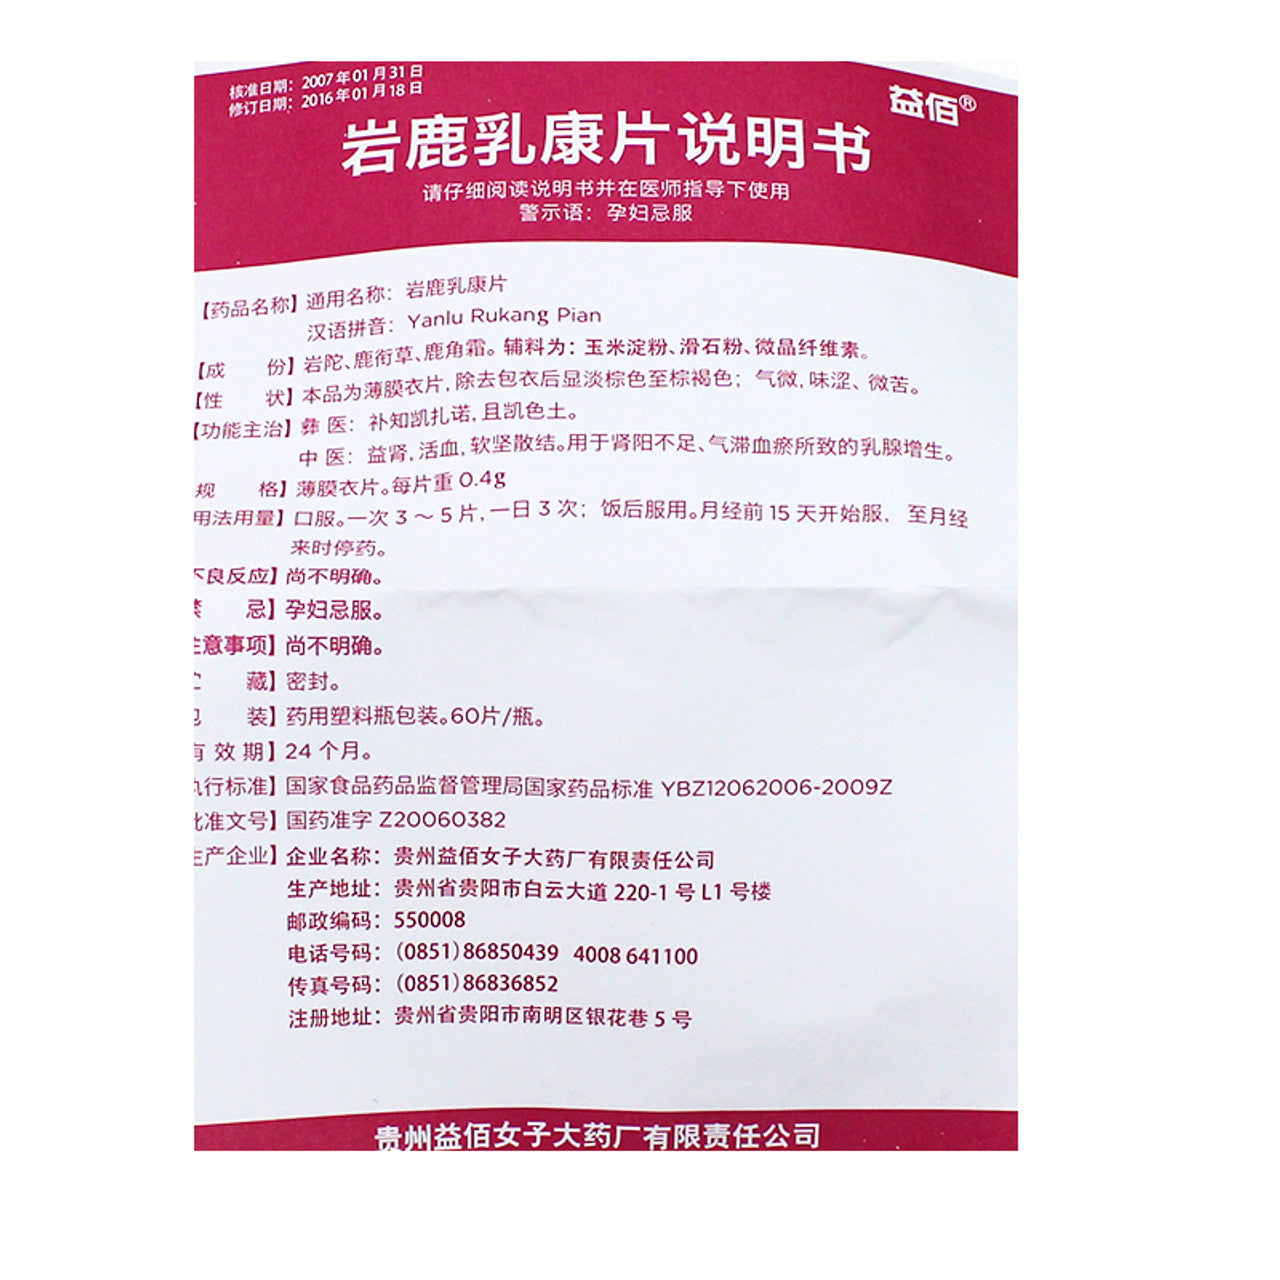 China Herb. Yanlu Rukang Pian / Yanlu Rukang Tablets / Yan Lu Ru Kang Pian / Yan Lu Ru Kang Tablets for Breast Disease 0.4g*60 Tablets*5 boxes